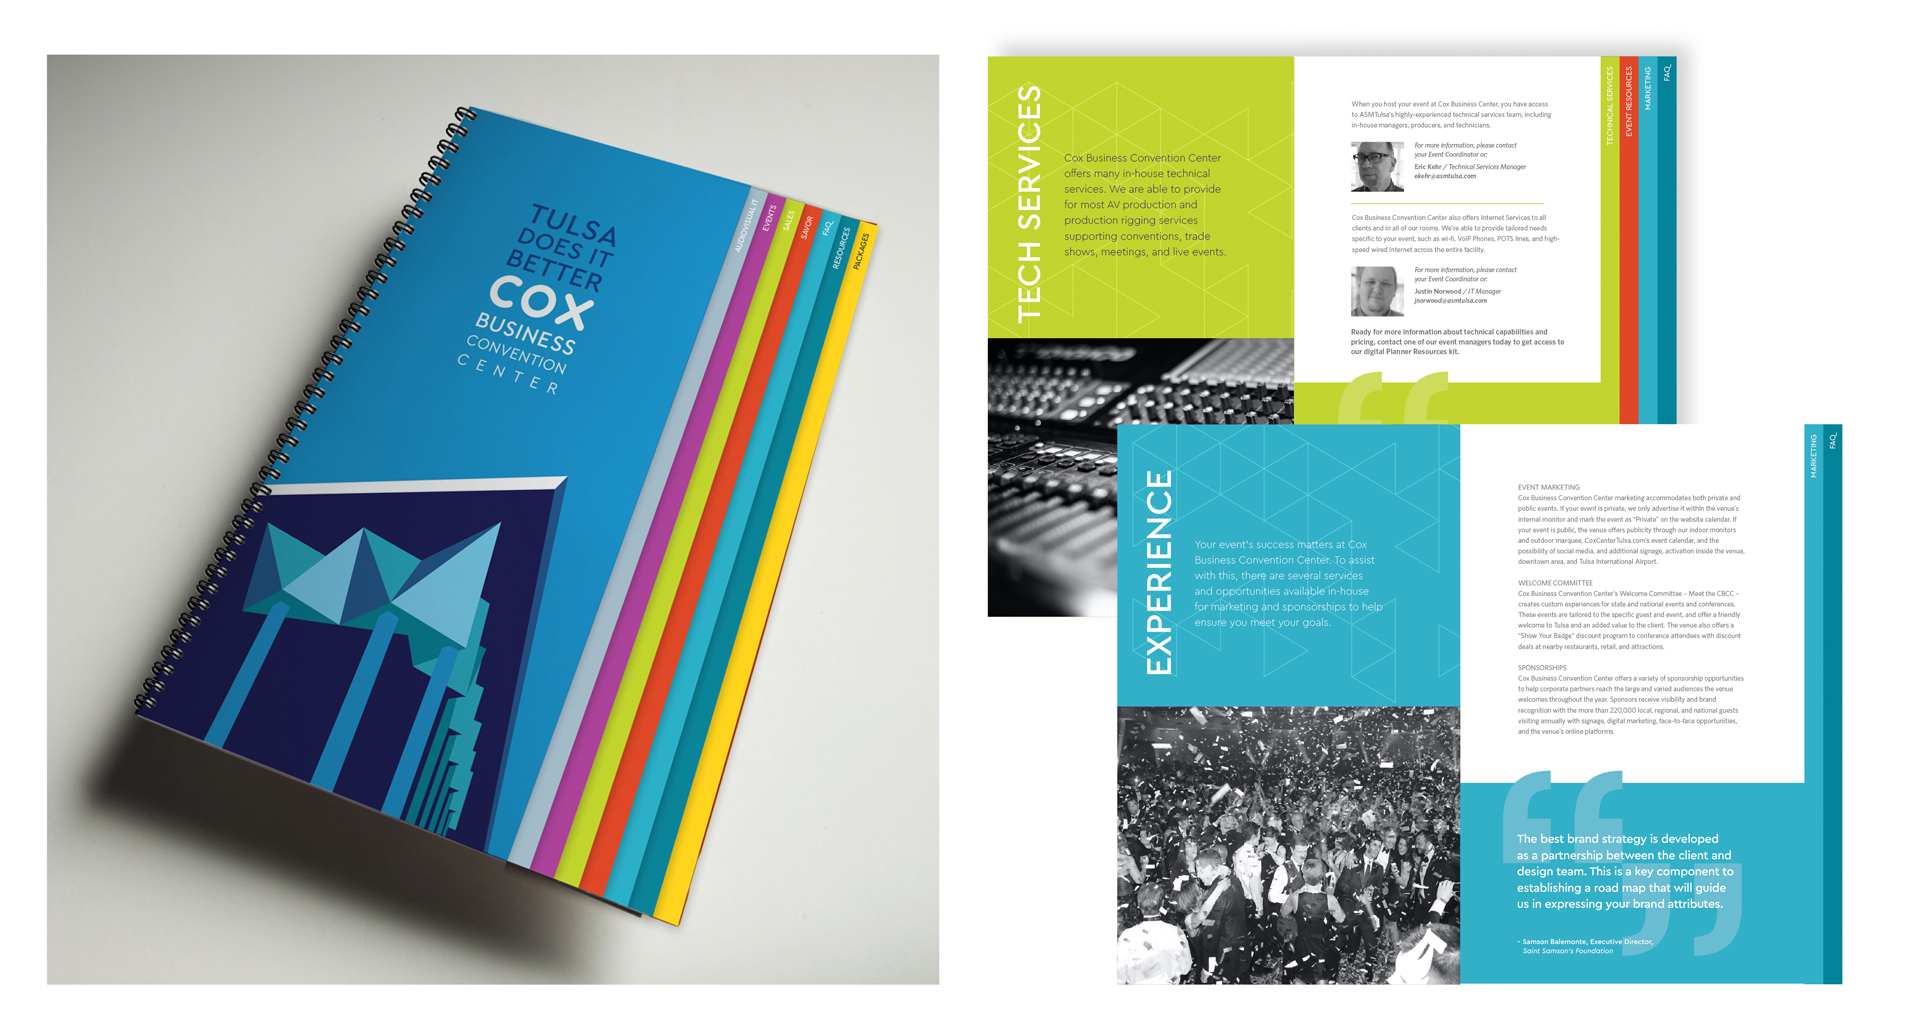 cox convention center book